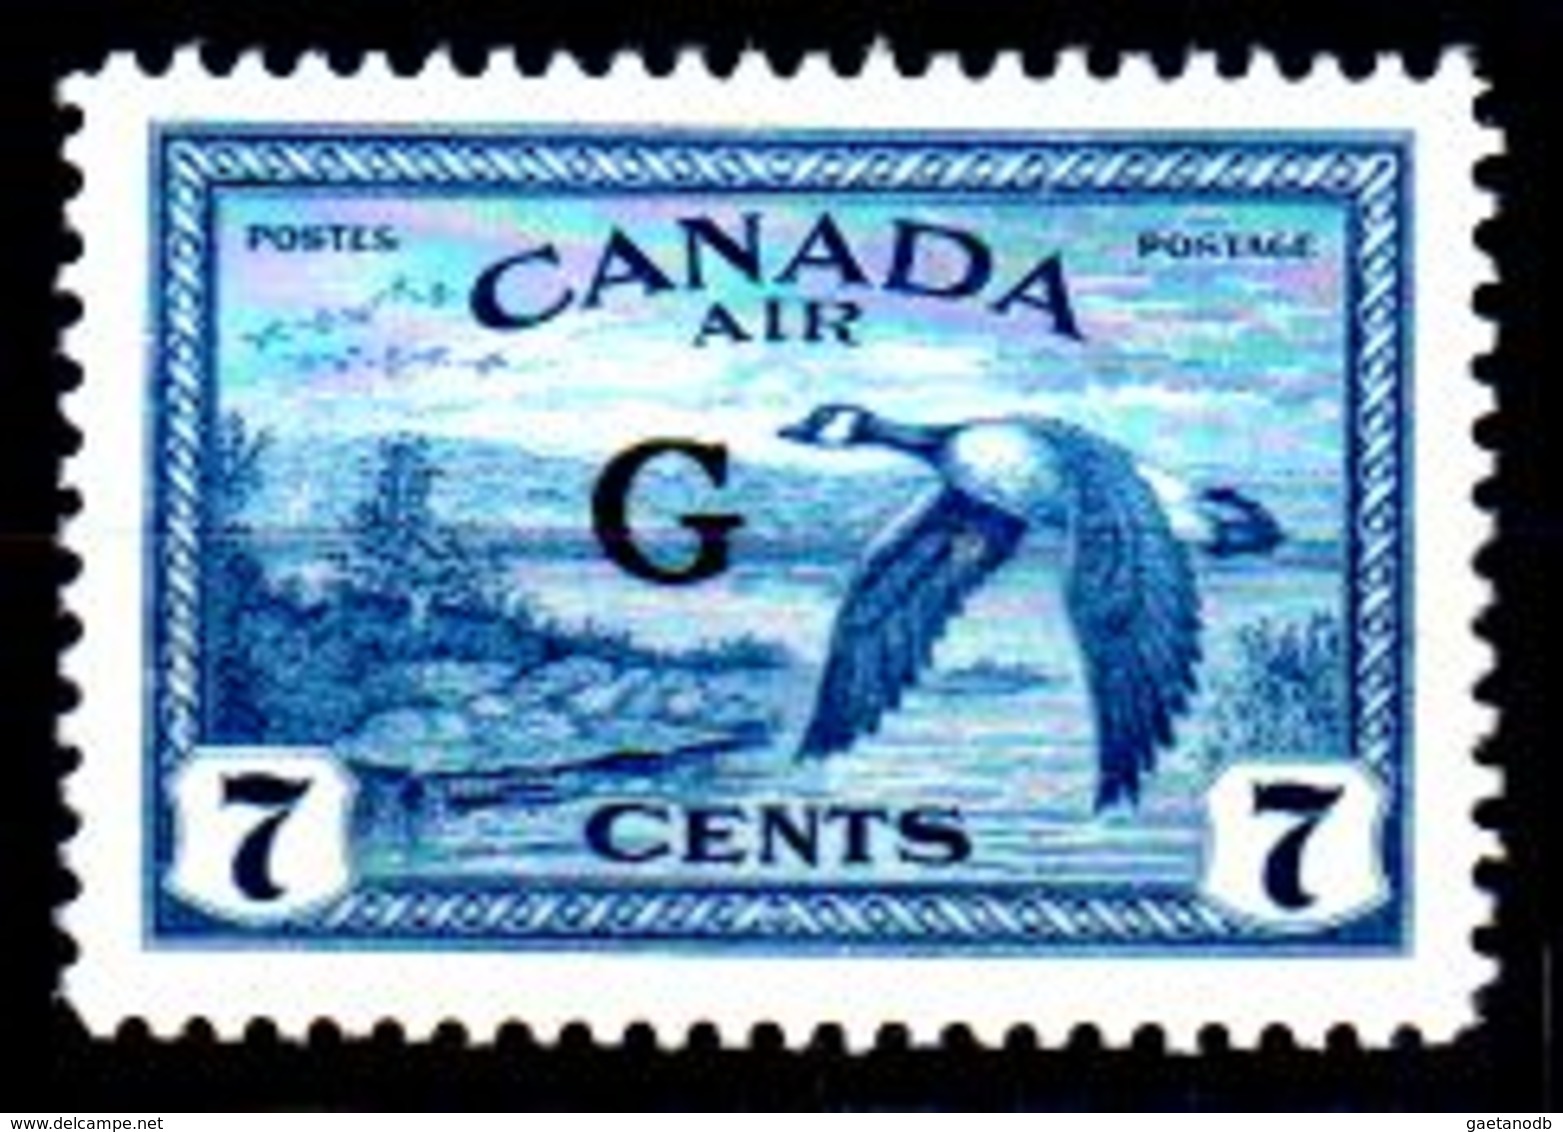 B364-Canada: SERVIZI 1950-52 (++) MNH - Senza Difetti Occulti - - Aufdrucksausgaben